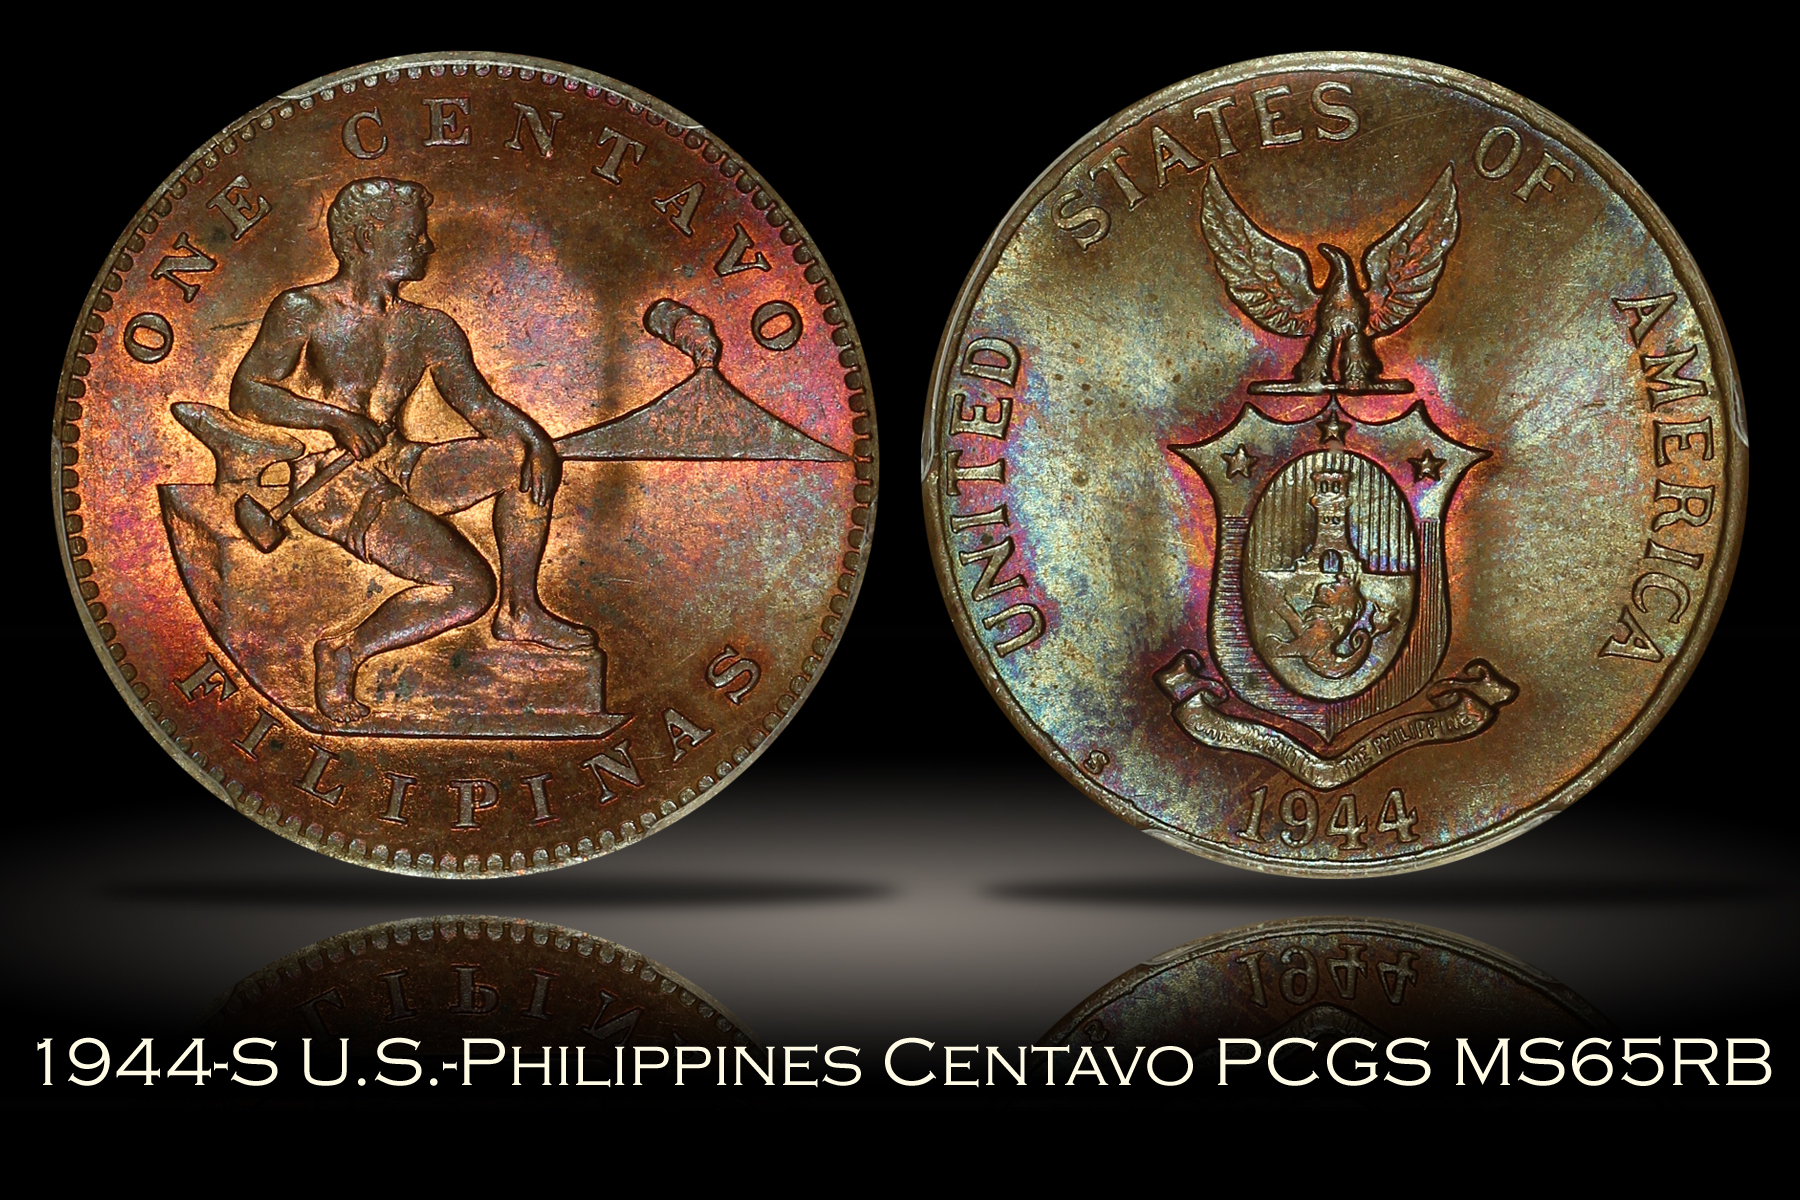 1944-S U.S.-Philippines One Centavo PCGS MS65RB